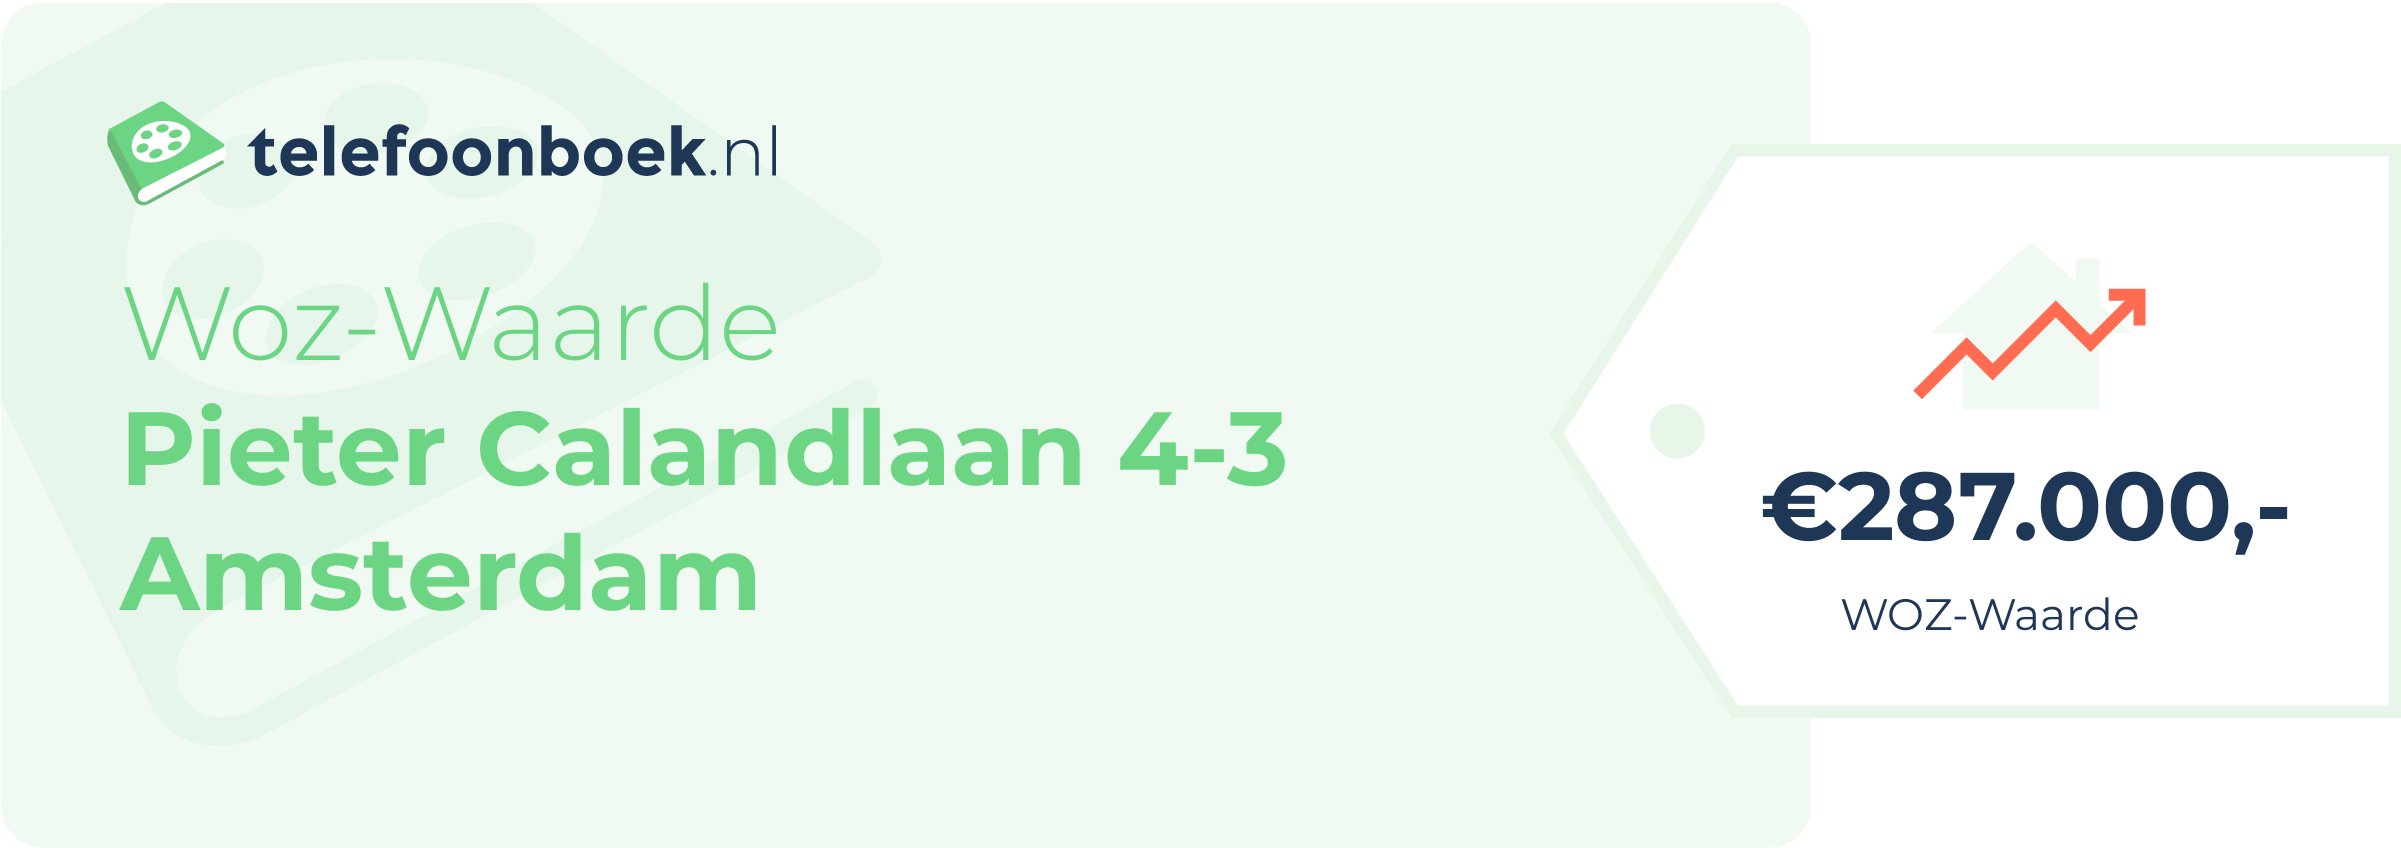 WOZ-waarde Pieter Calandlaan 4-3 Amsterdam